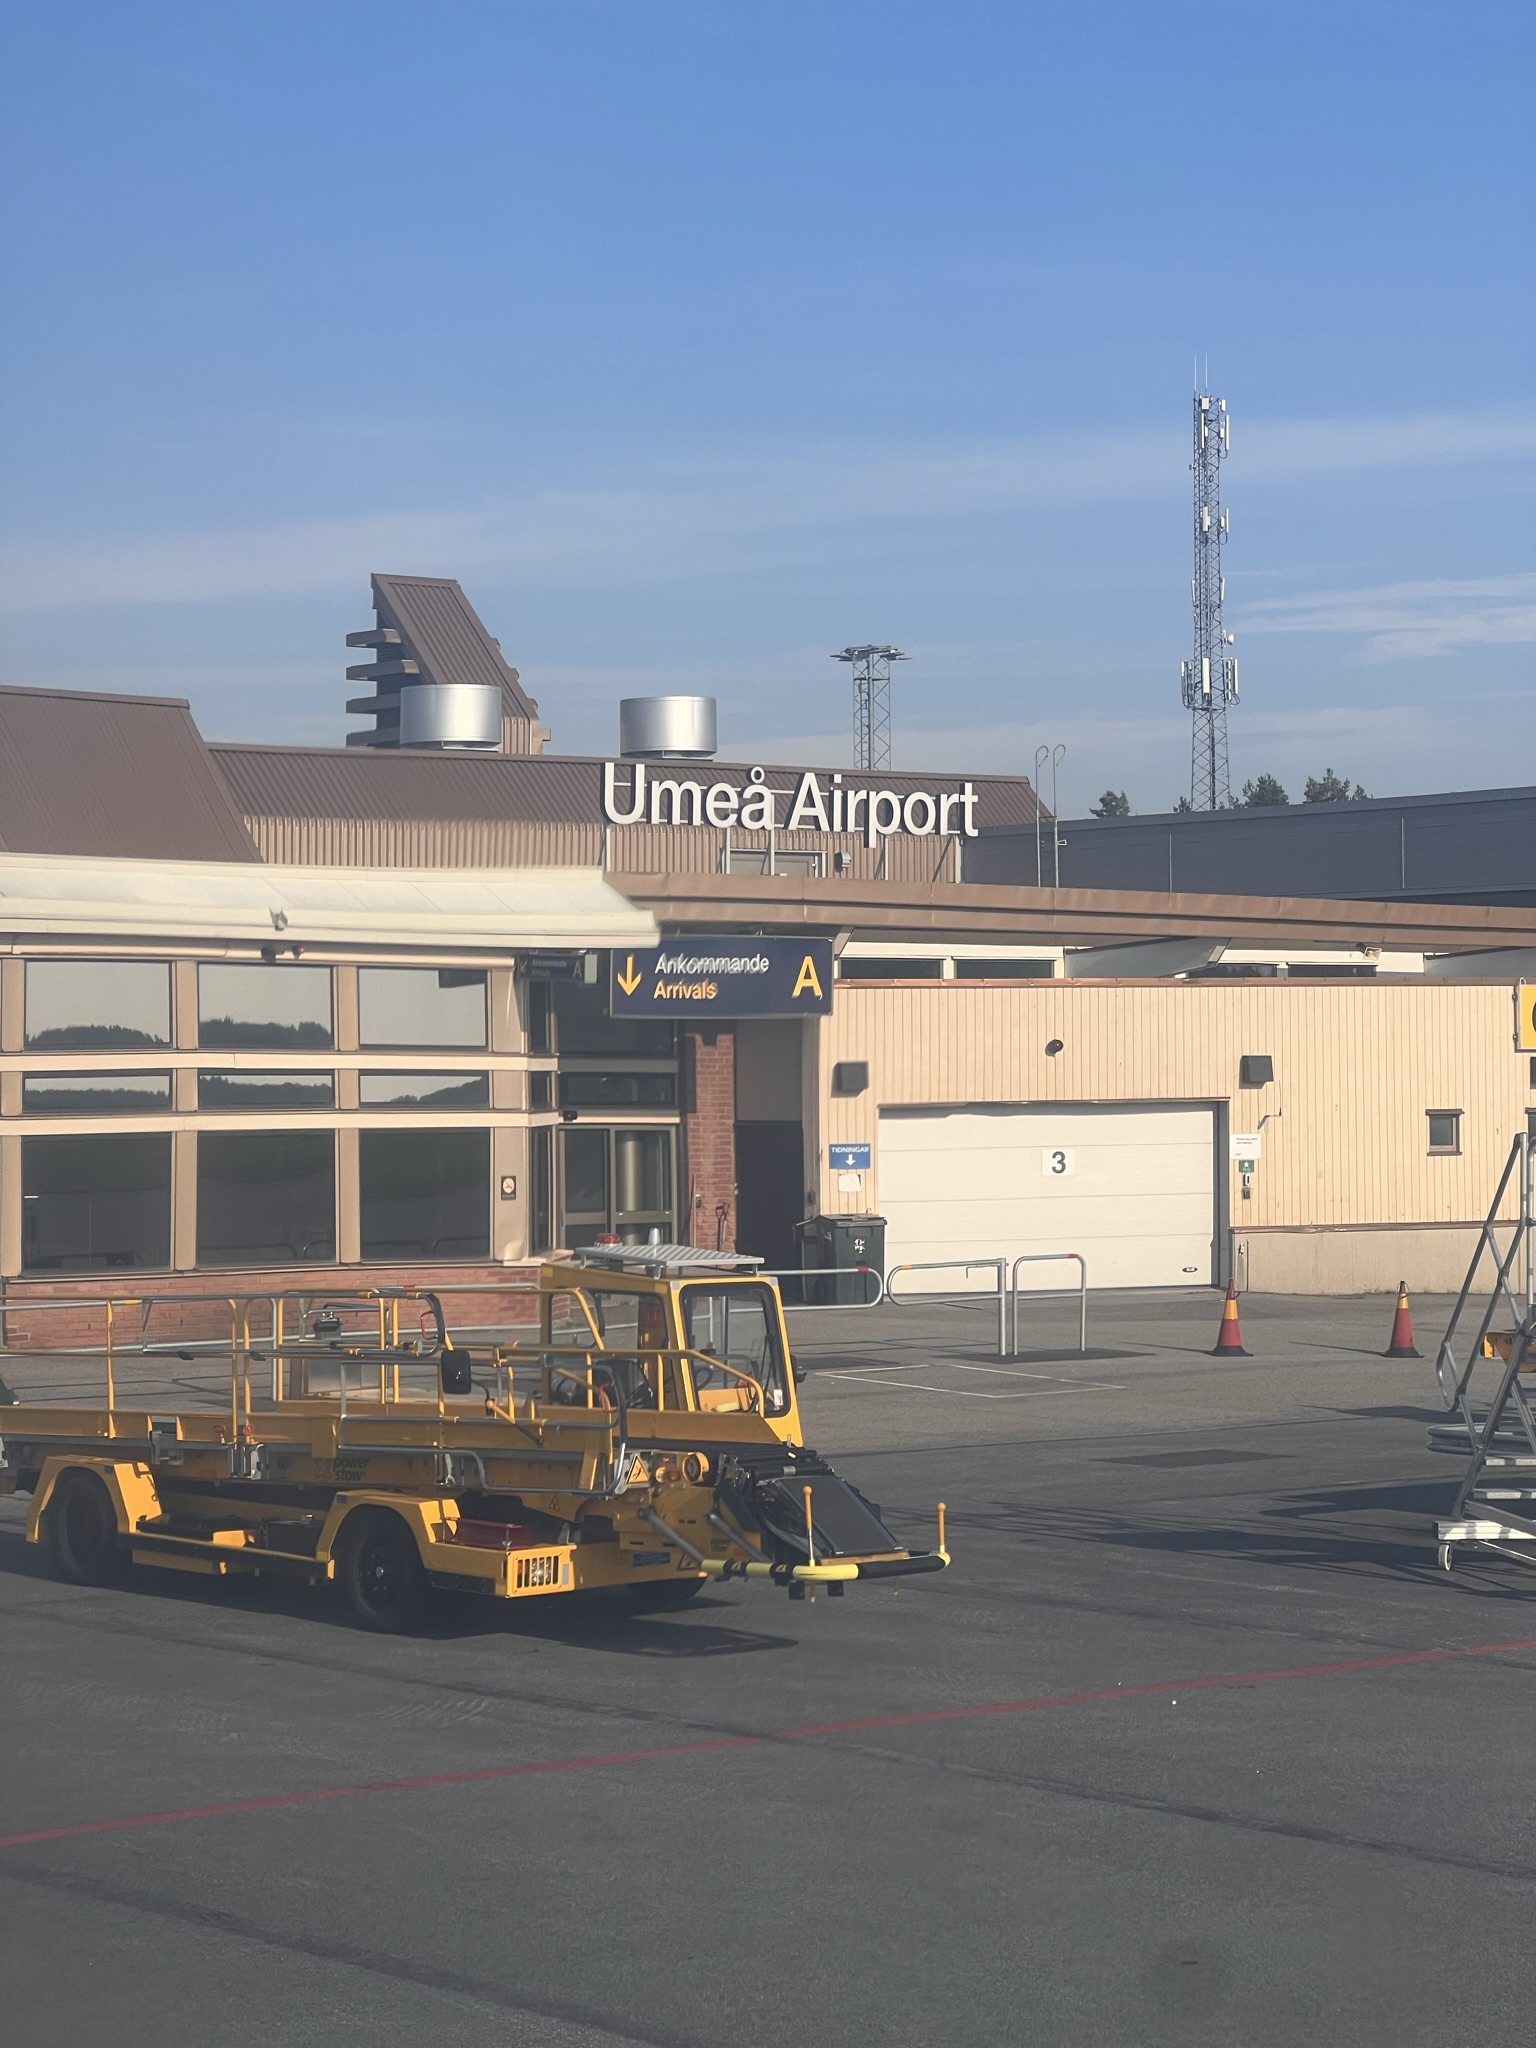 10-9 aankomst Umeå Airport - rondreis Lapland